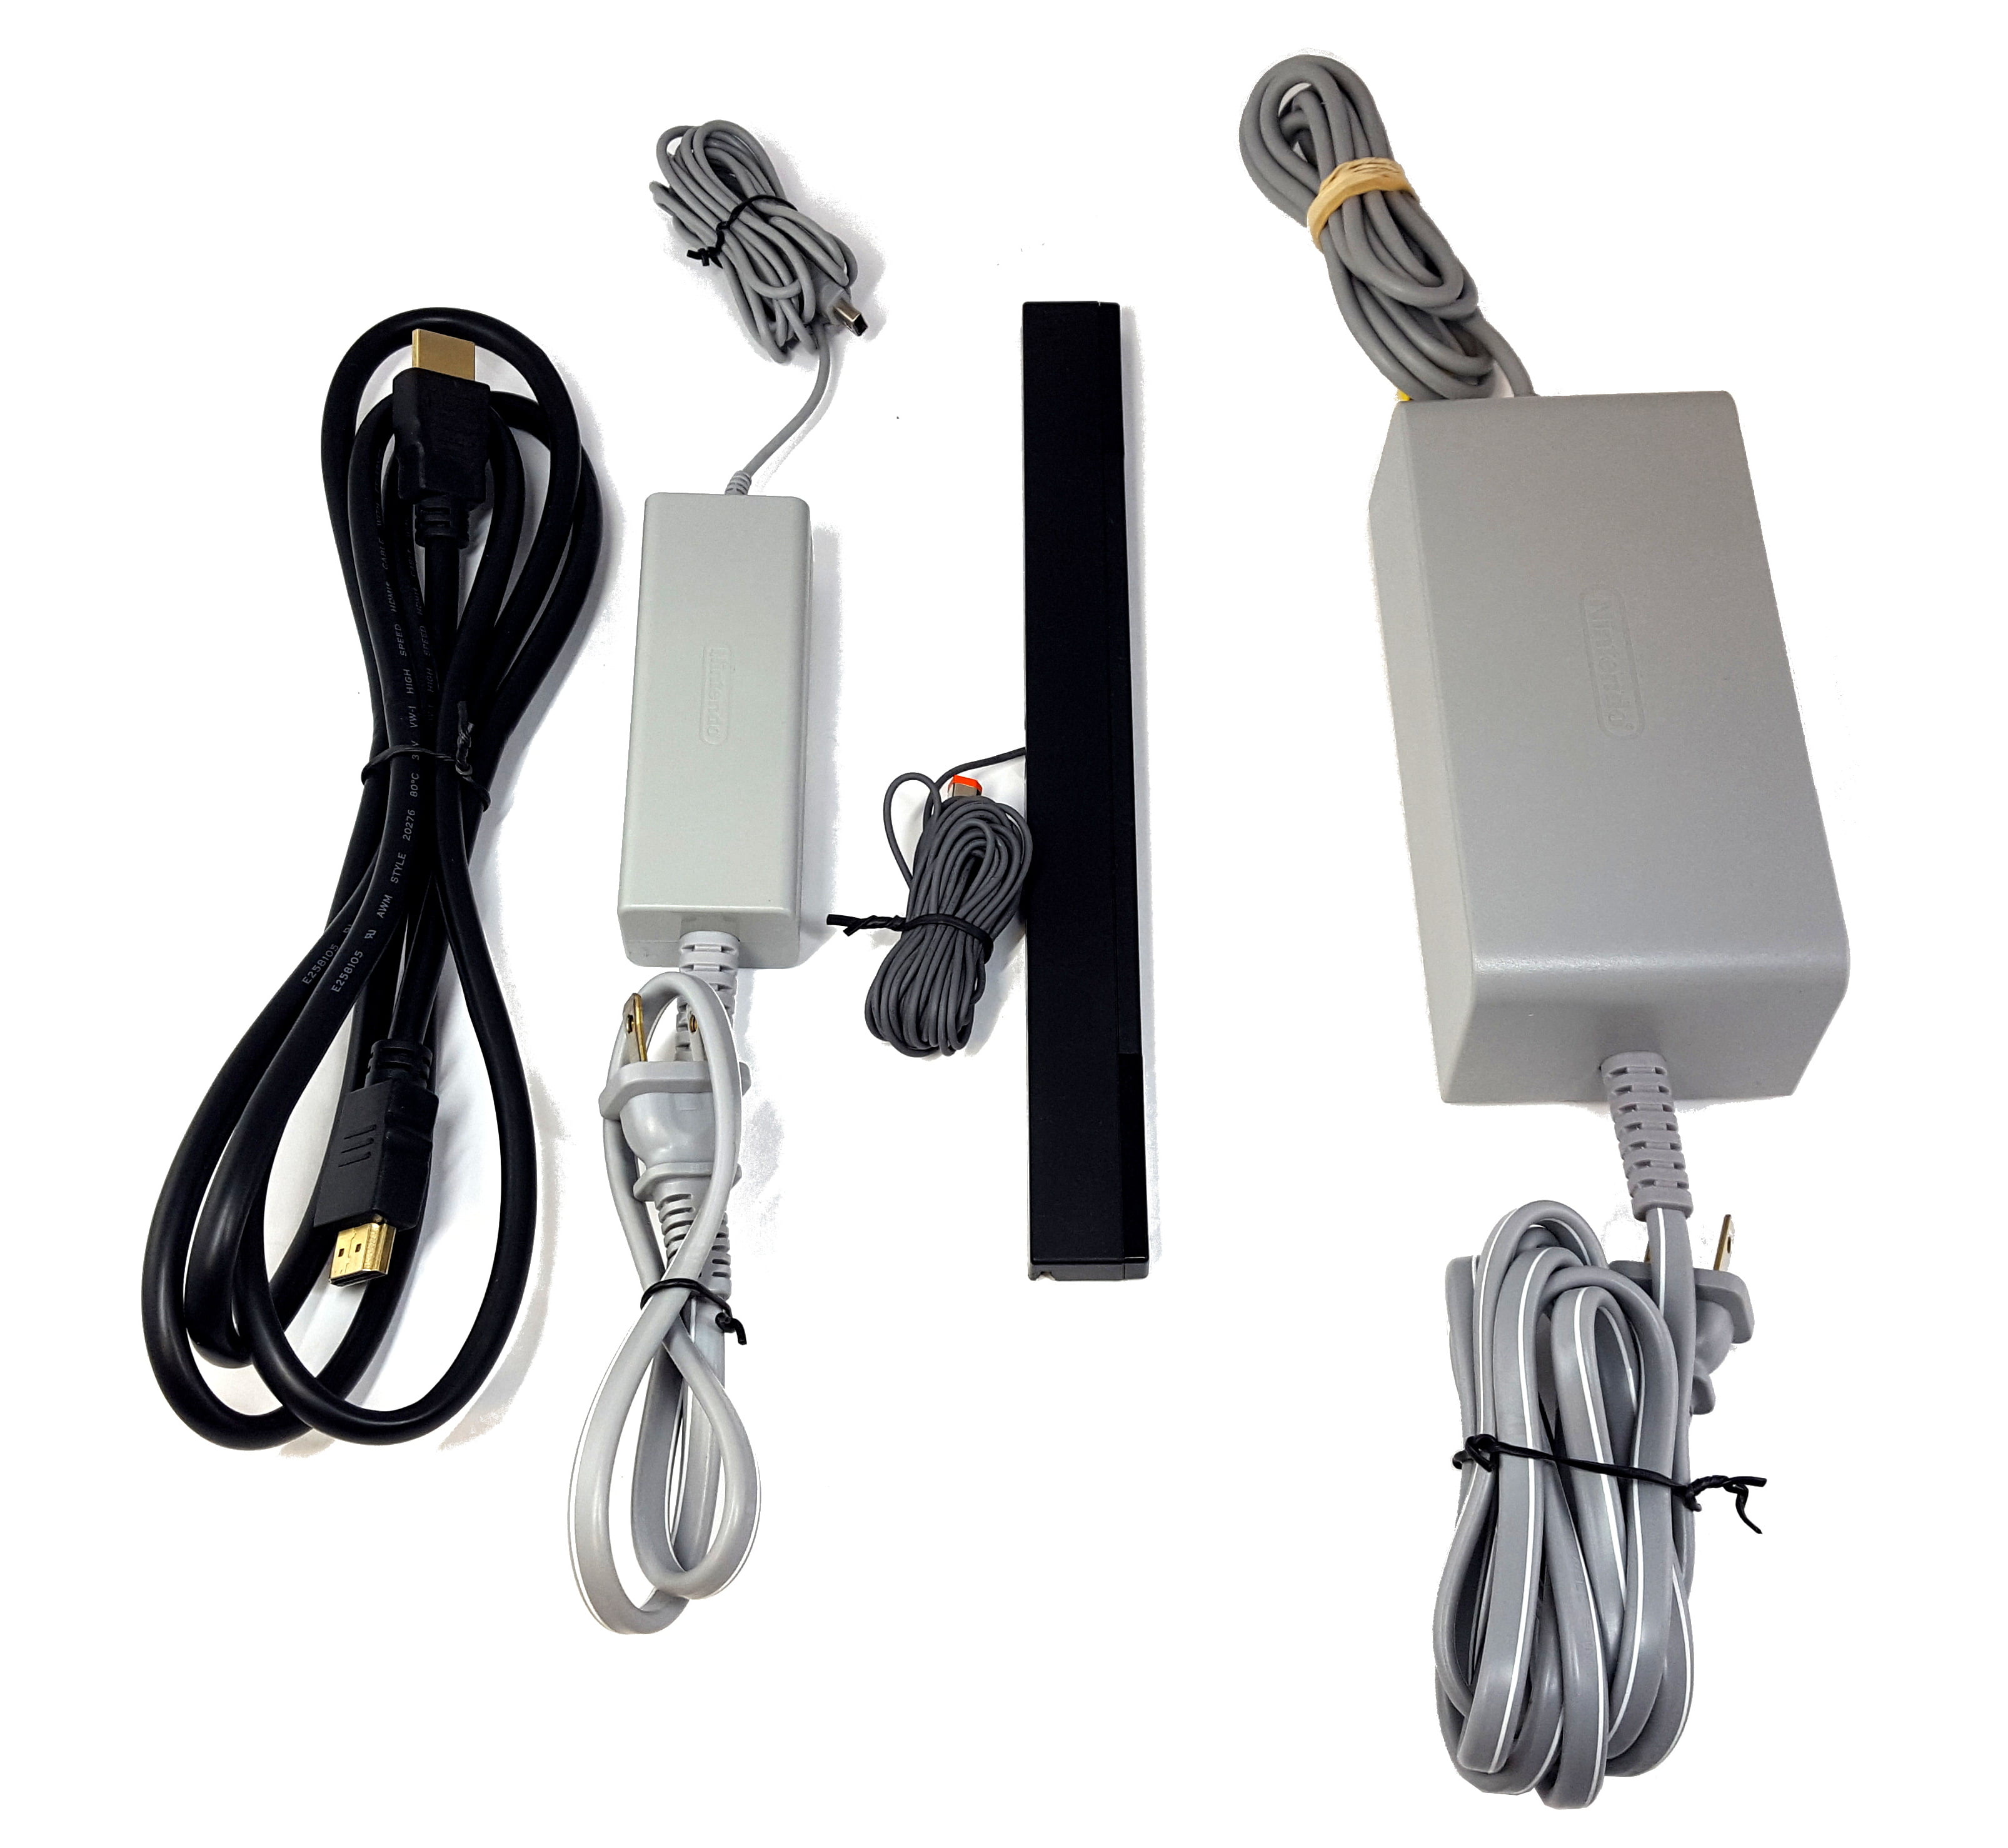 Cyber - Nintendo WiiU [Usado] ₡165,000 Incluye: •Consola + Gamepad •Control  Wii remote •Mario Kart 8 •Sensor wii •Cable HDMI •Adaptador de corriente  •Base cargadora de Gamepad •2 meses de garantía